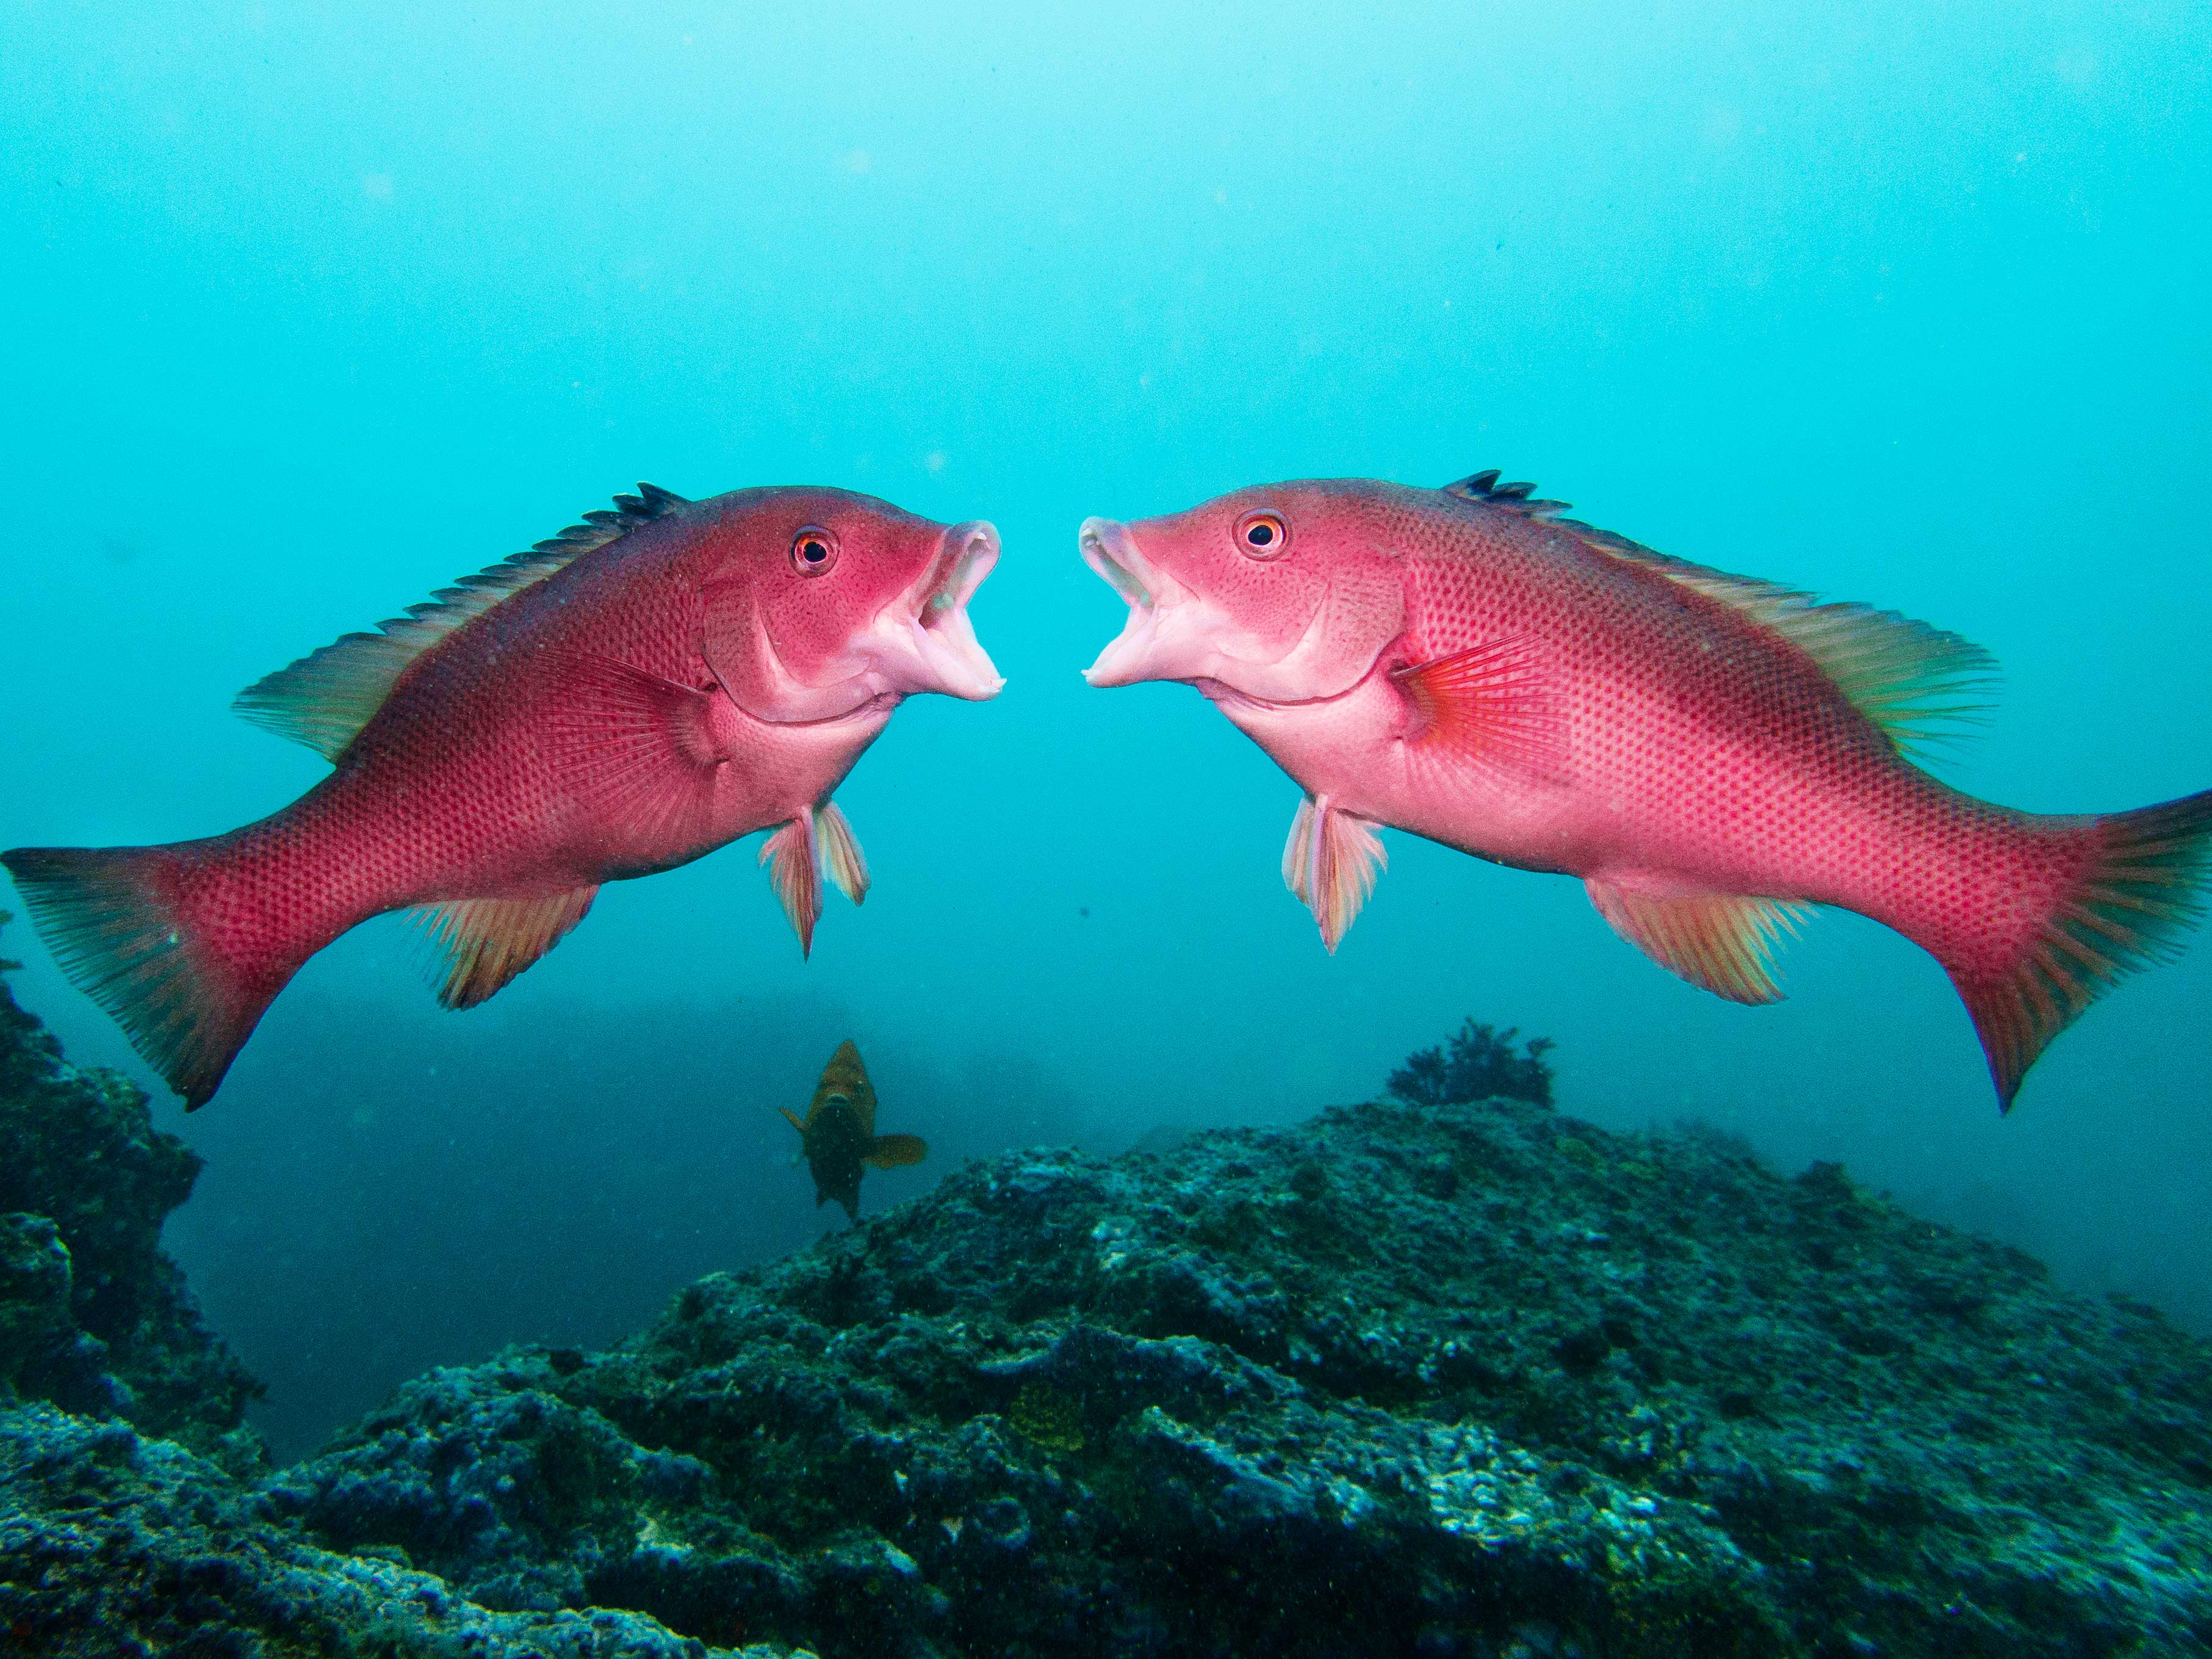 Two fish kissing